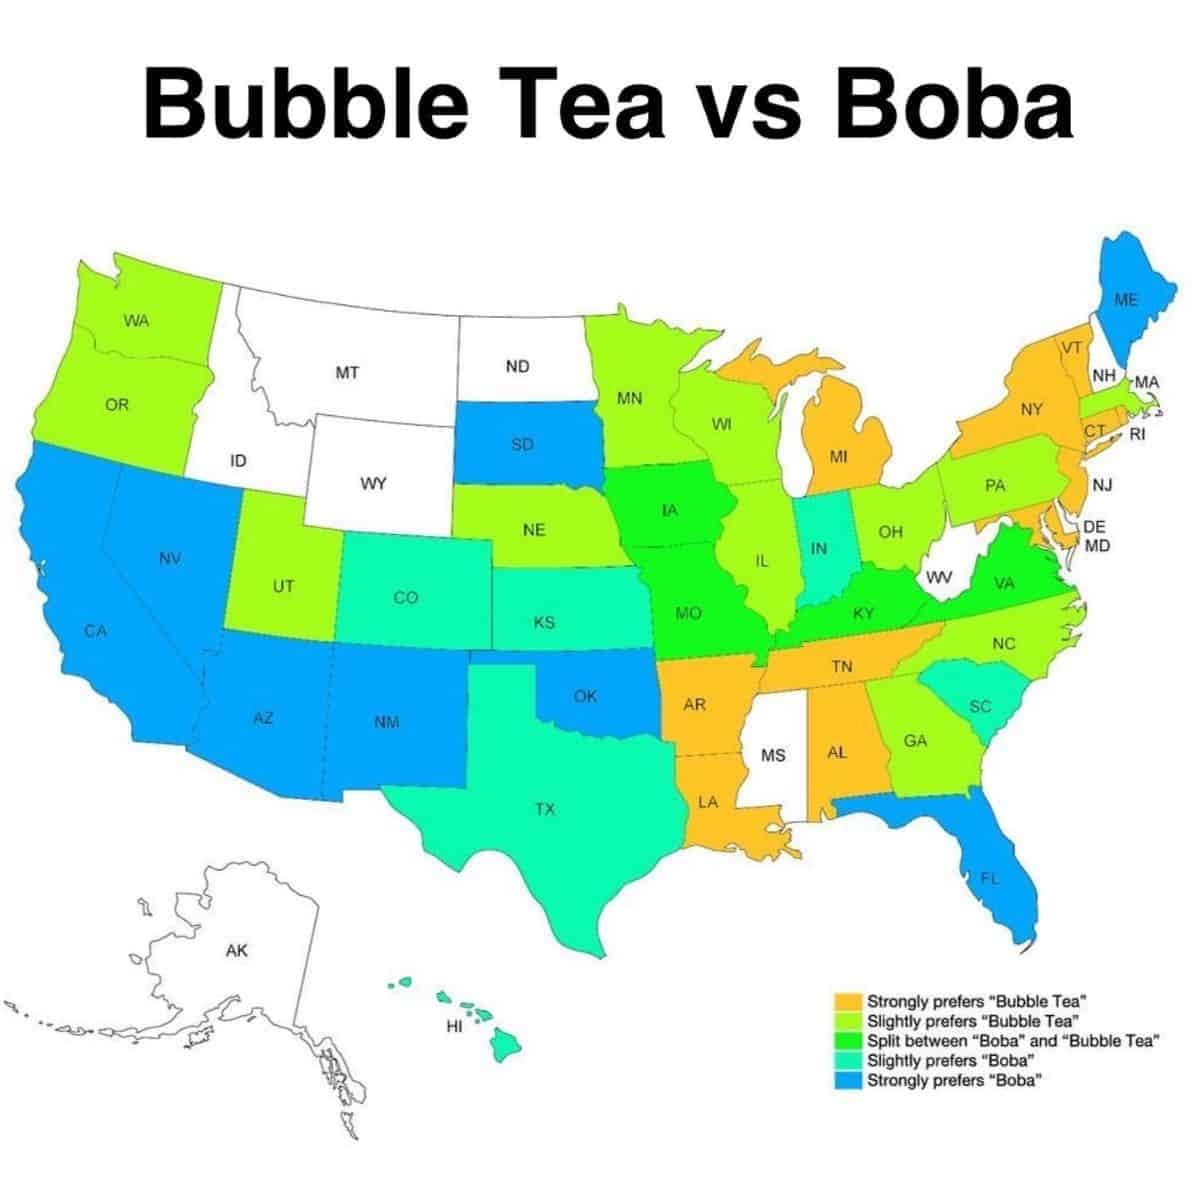 Bubble tea vs boba infographic